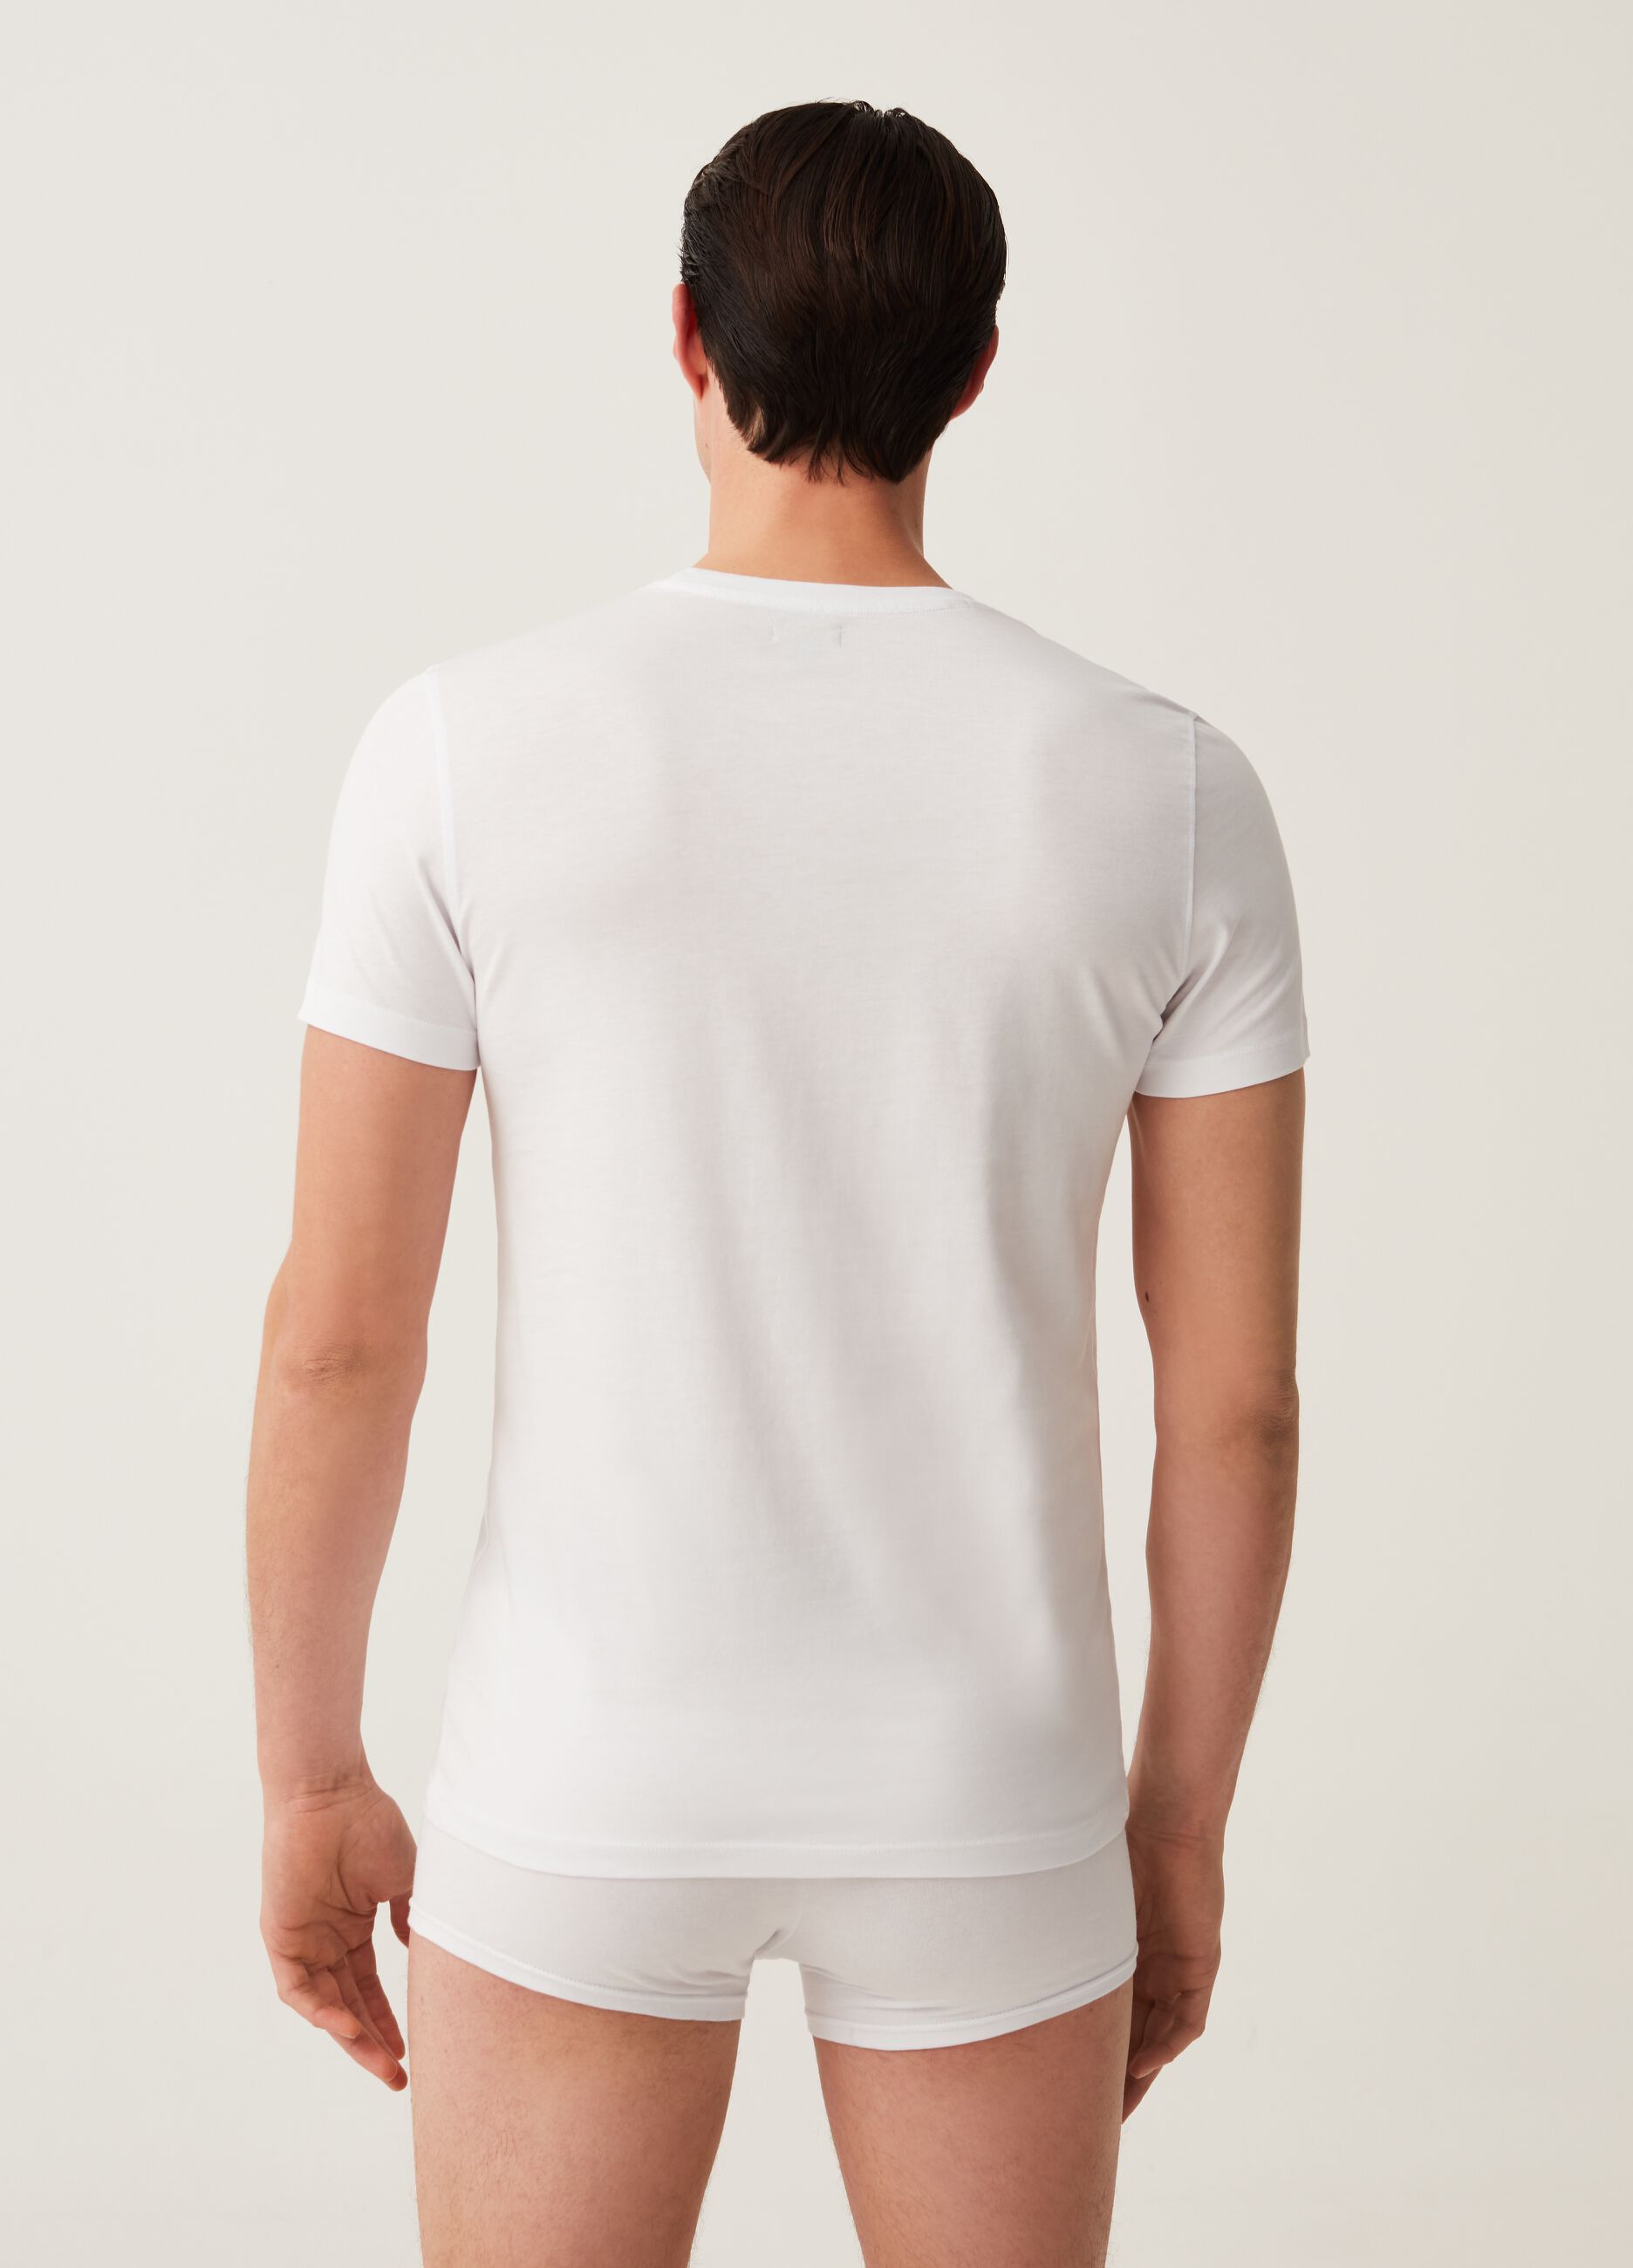 Supima cotton undershirt